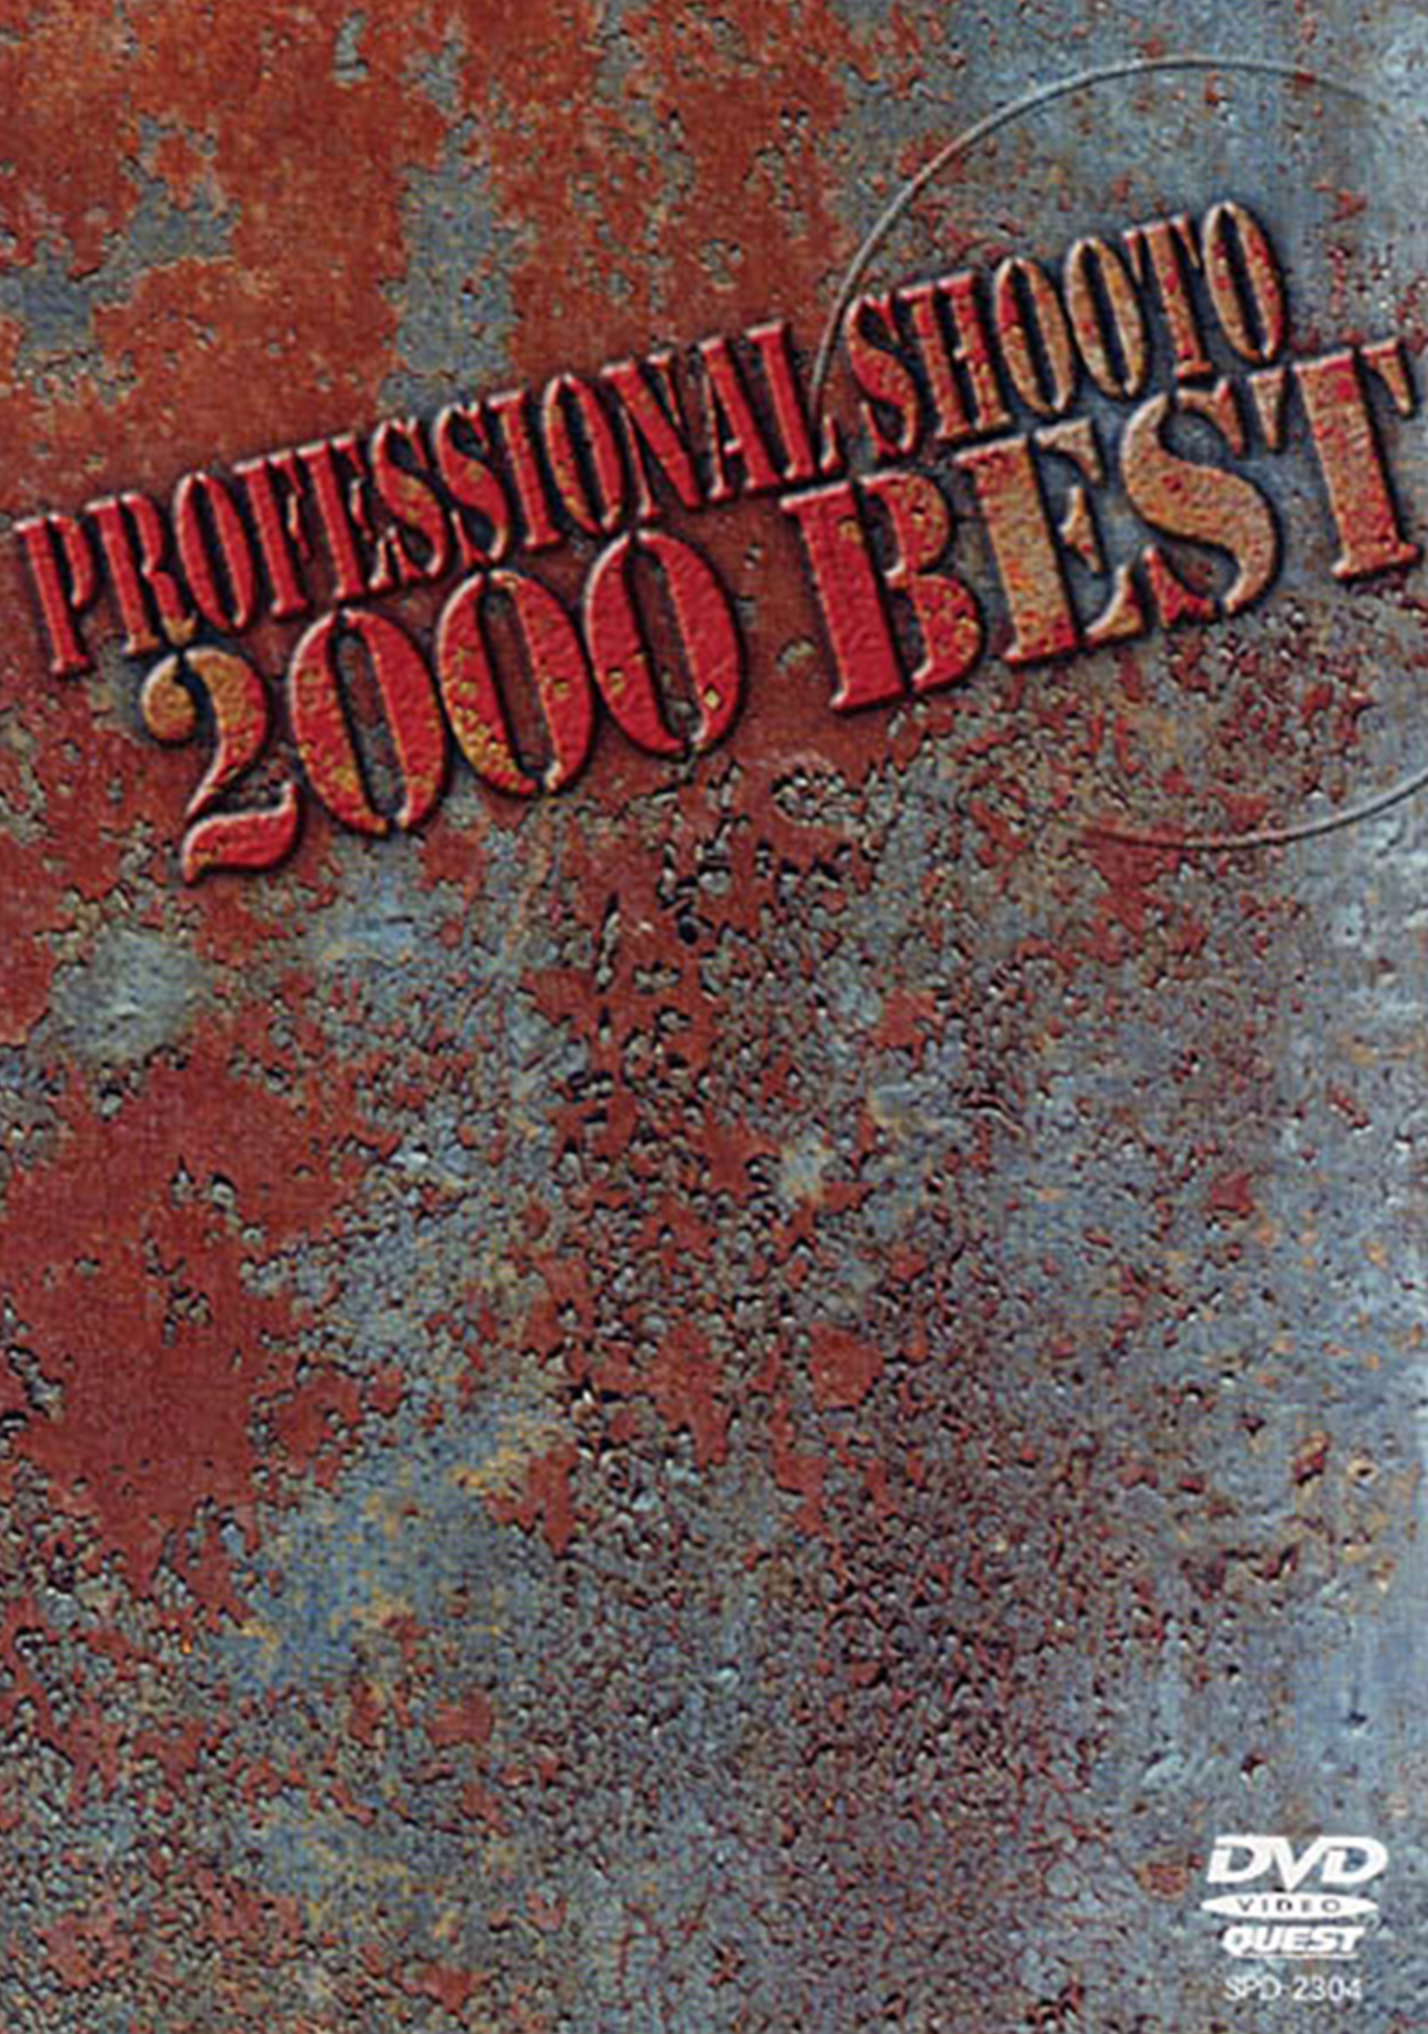 Shooto 2000 Best of DVD - Budovideos Inc